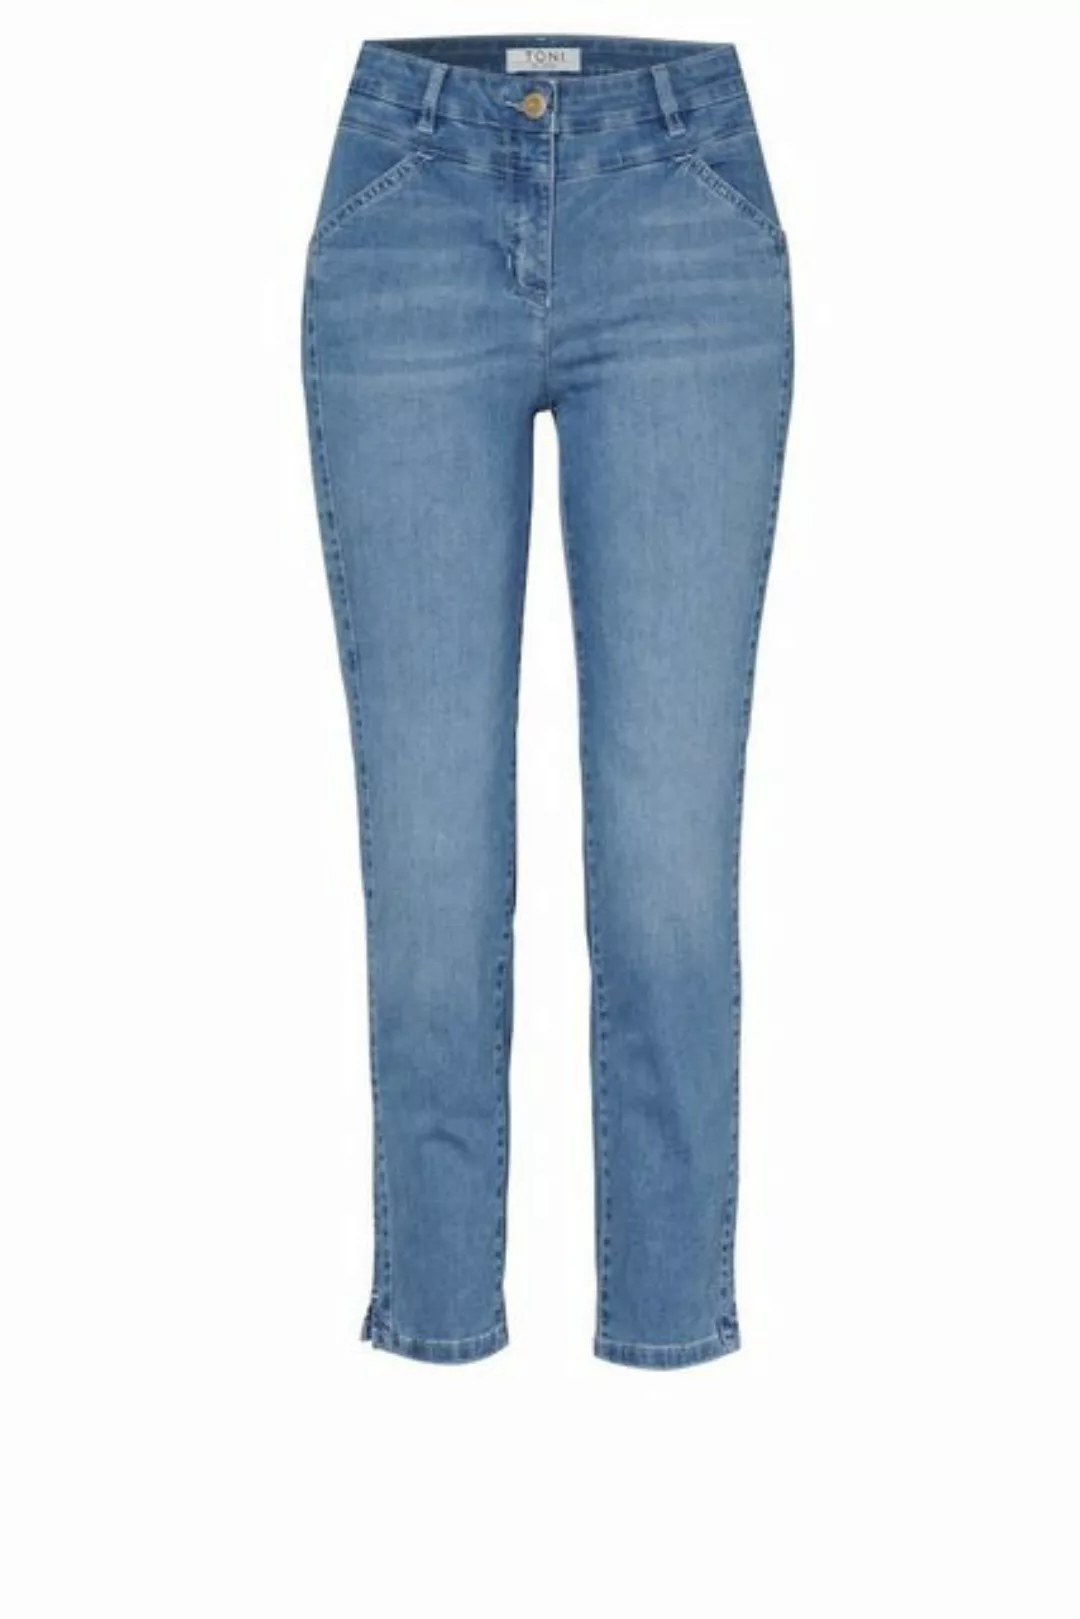 TONI Bequeme Jeans TONI / Da.Jeans / be loved 7/8 günstig online kaufen